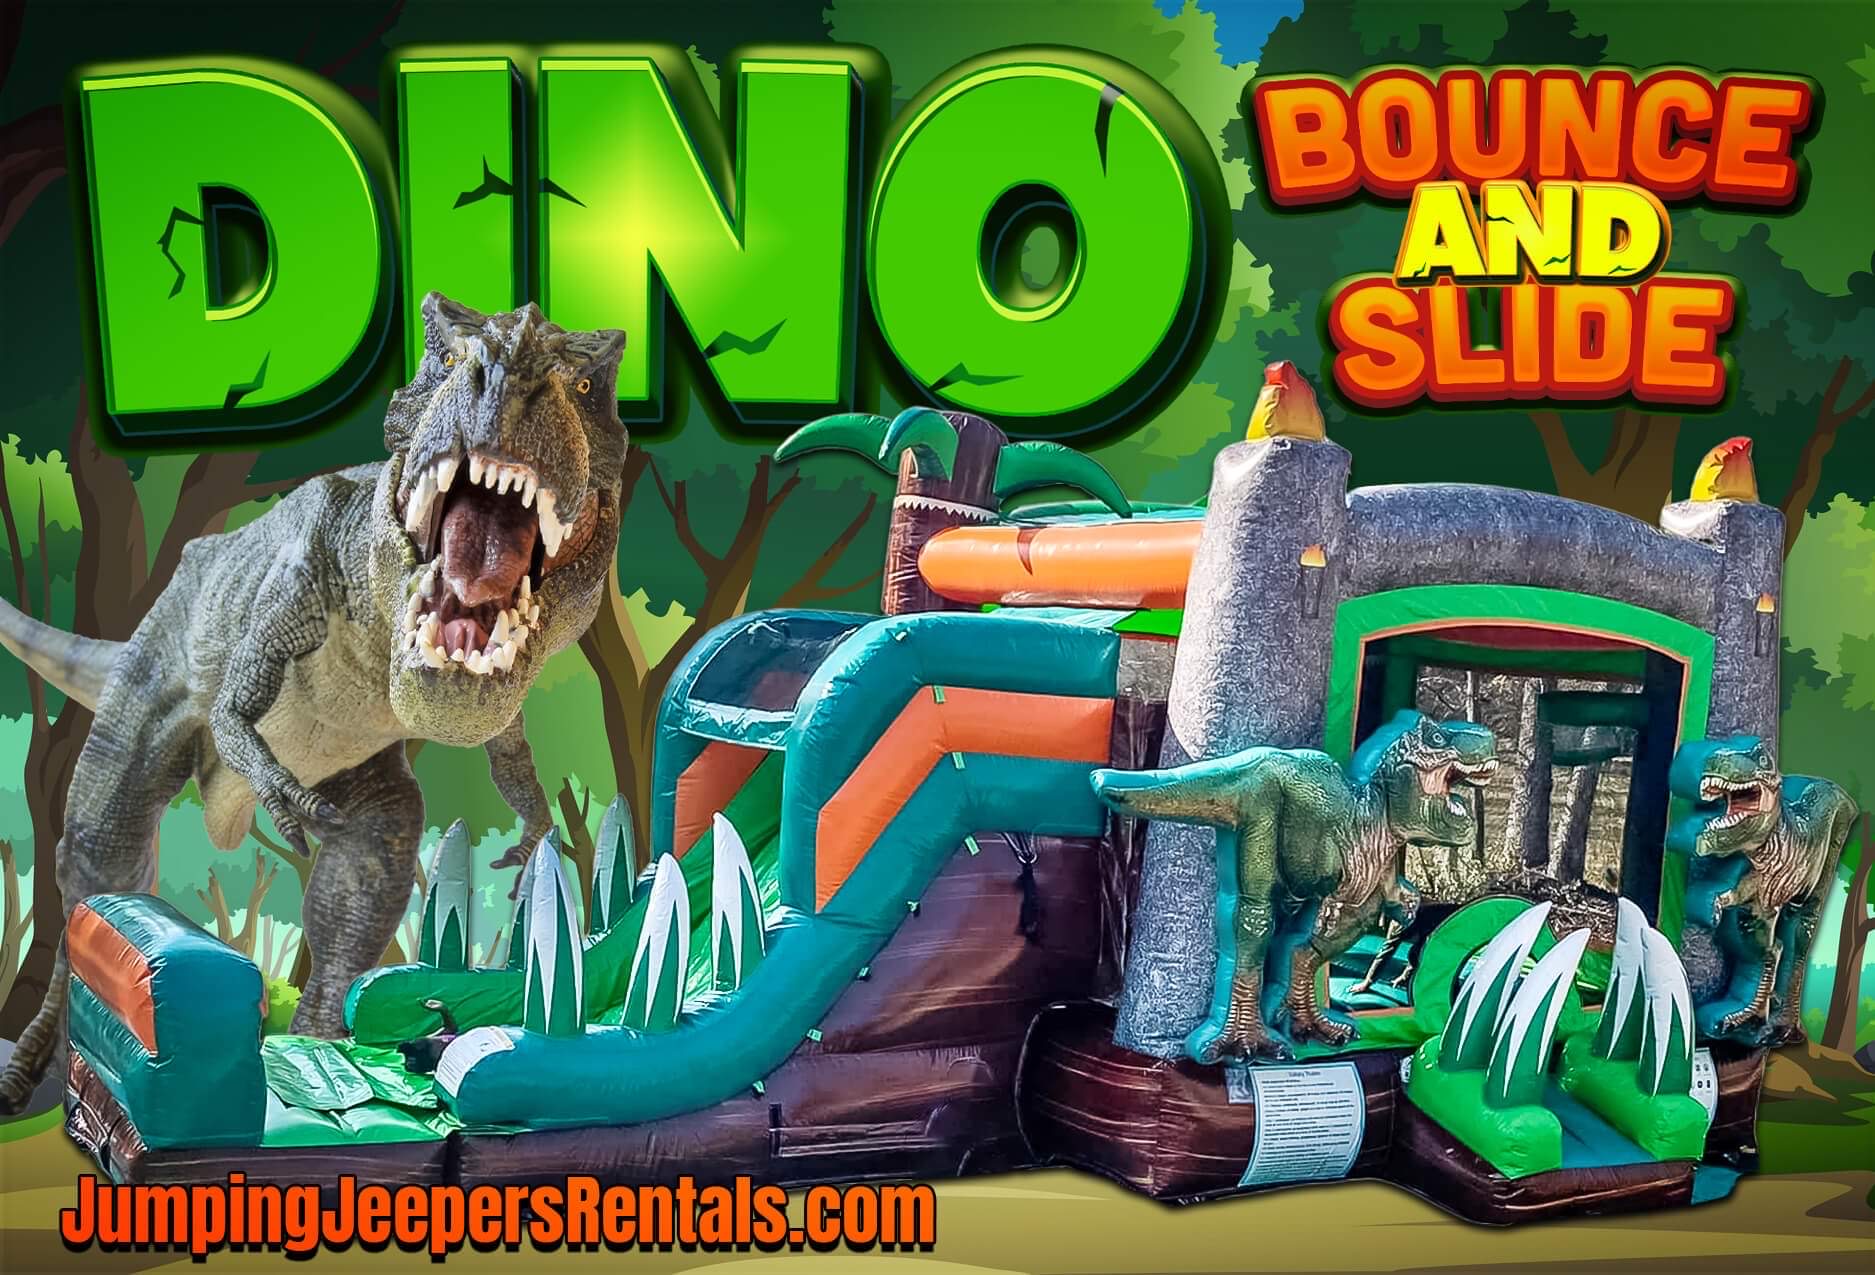 Dinosaur Bounce House rental in Rincon GA.